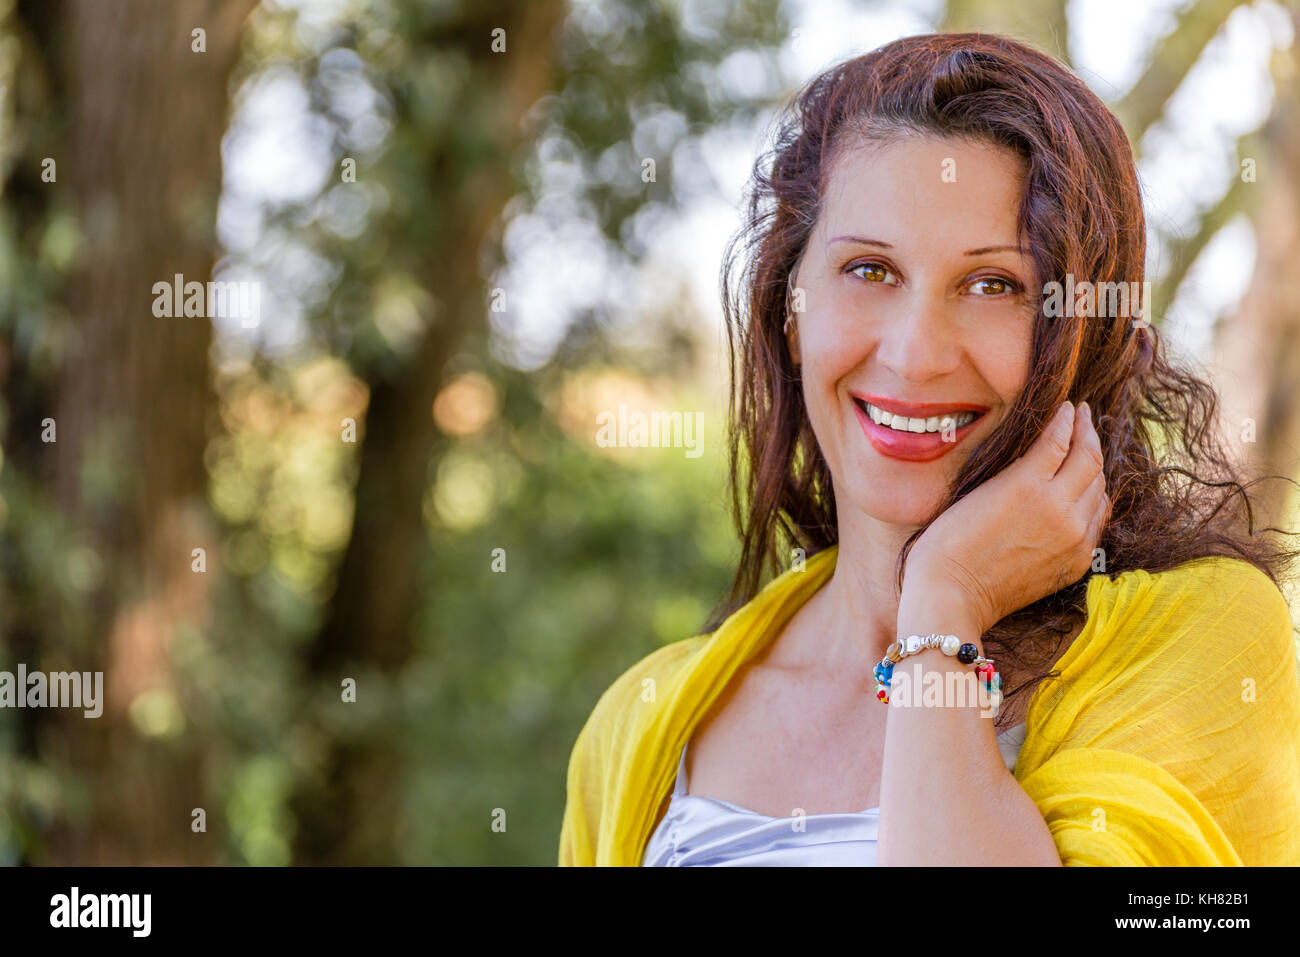 Elegante South American donna con mantello giallo e scialle e silver top è sorridente in un parco verde Foto Stock